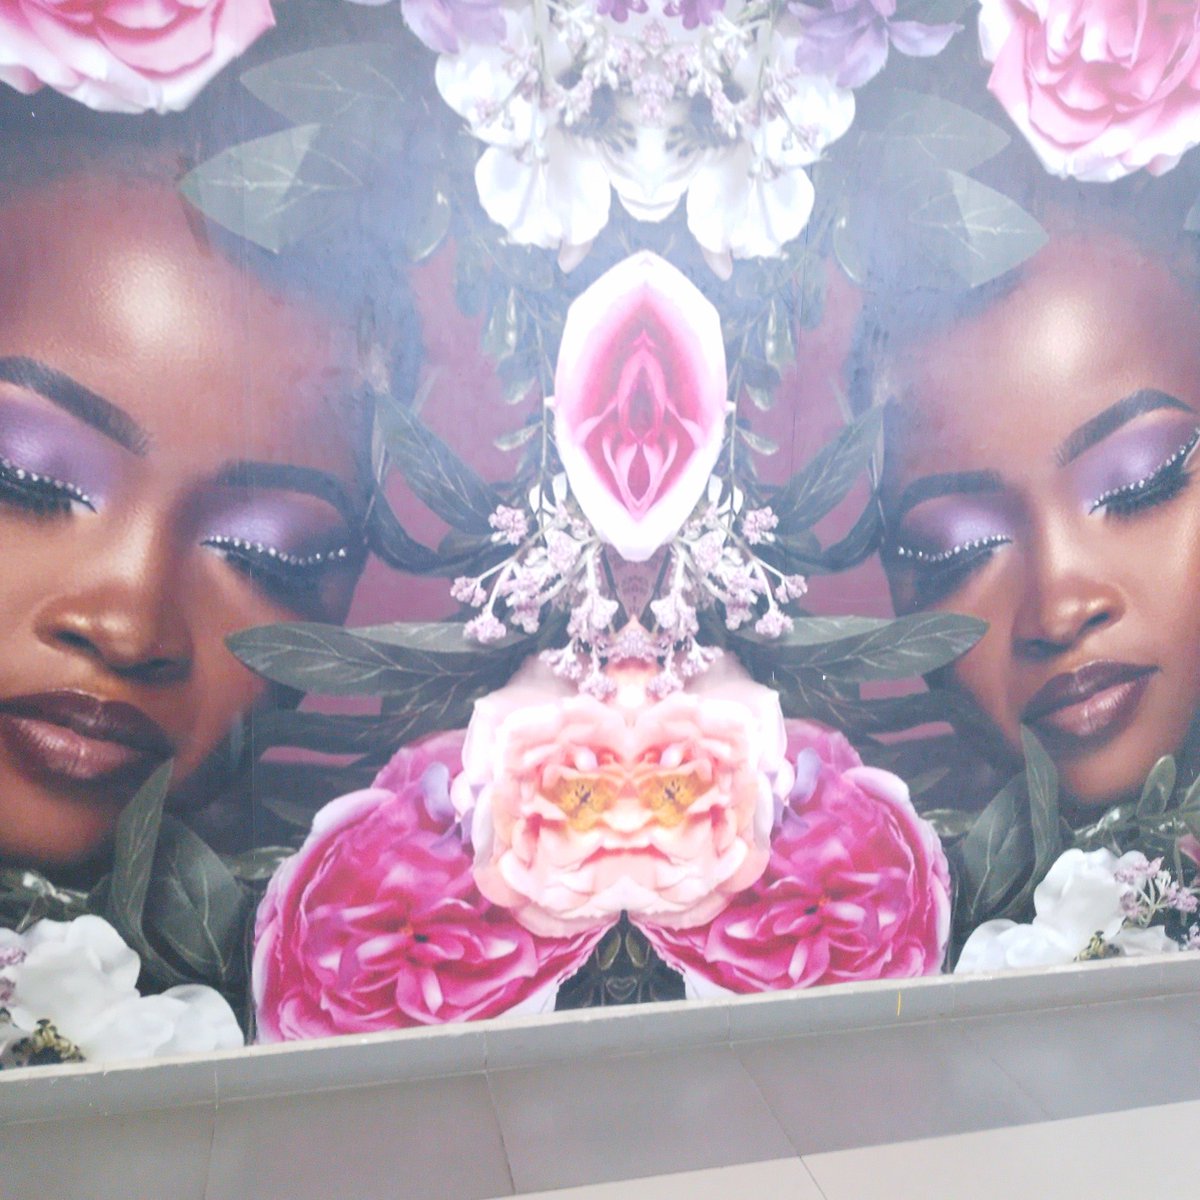 Huku imara mall kuna art deadly deadly 😂